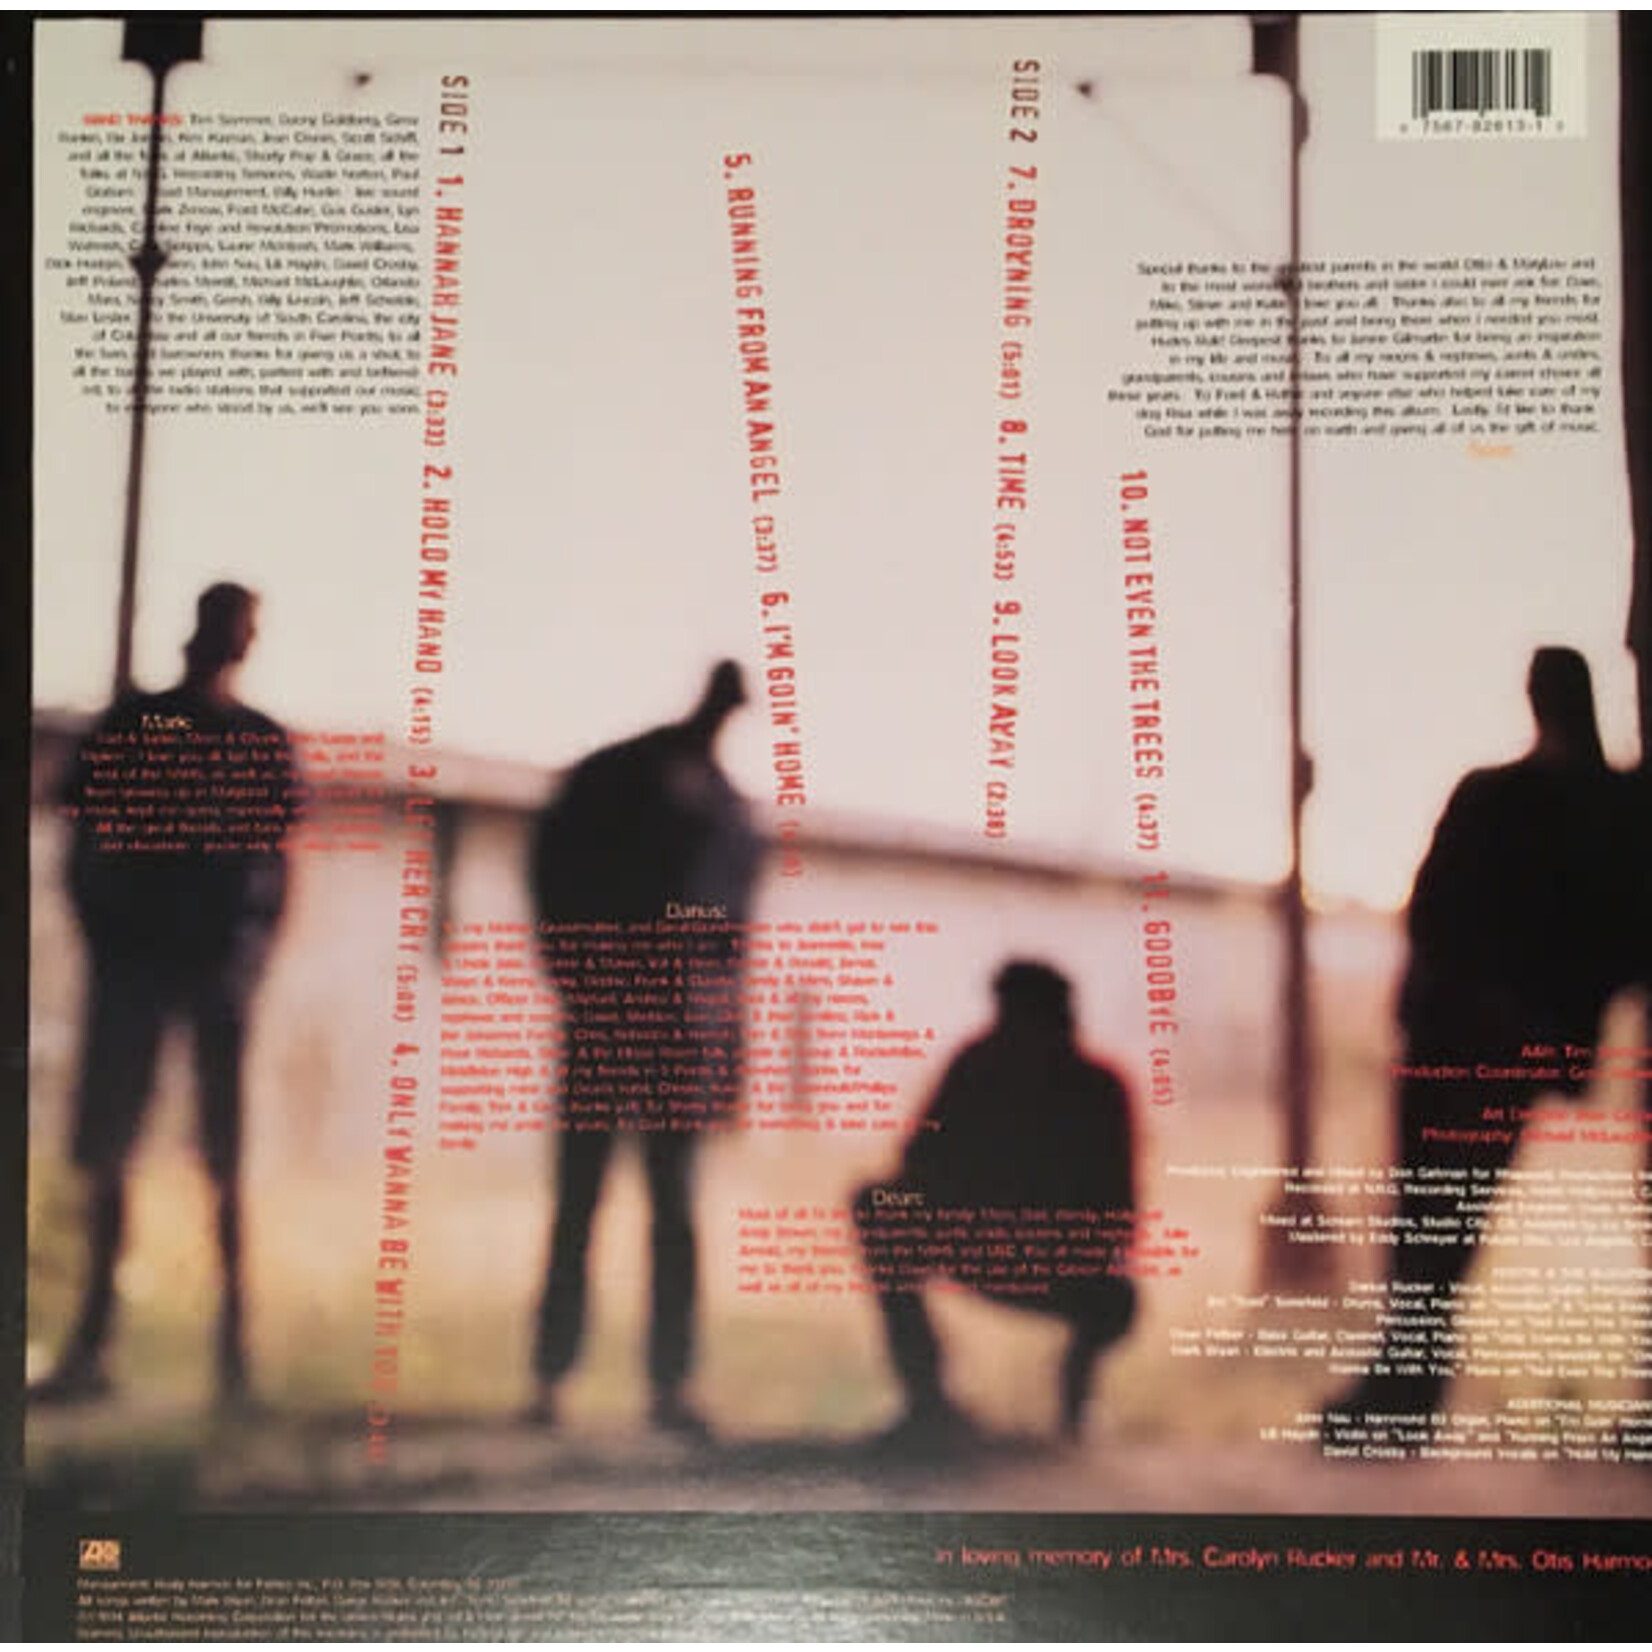 Atlantic Hootie & The Blowfish - Cracked Rear View (LP)